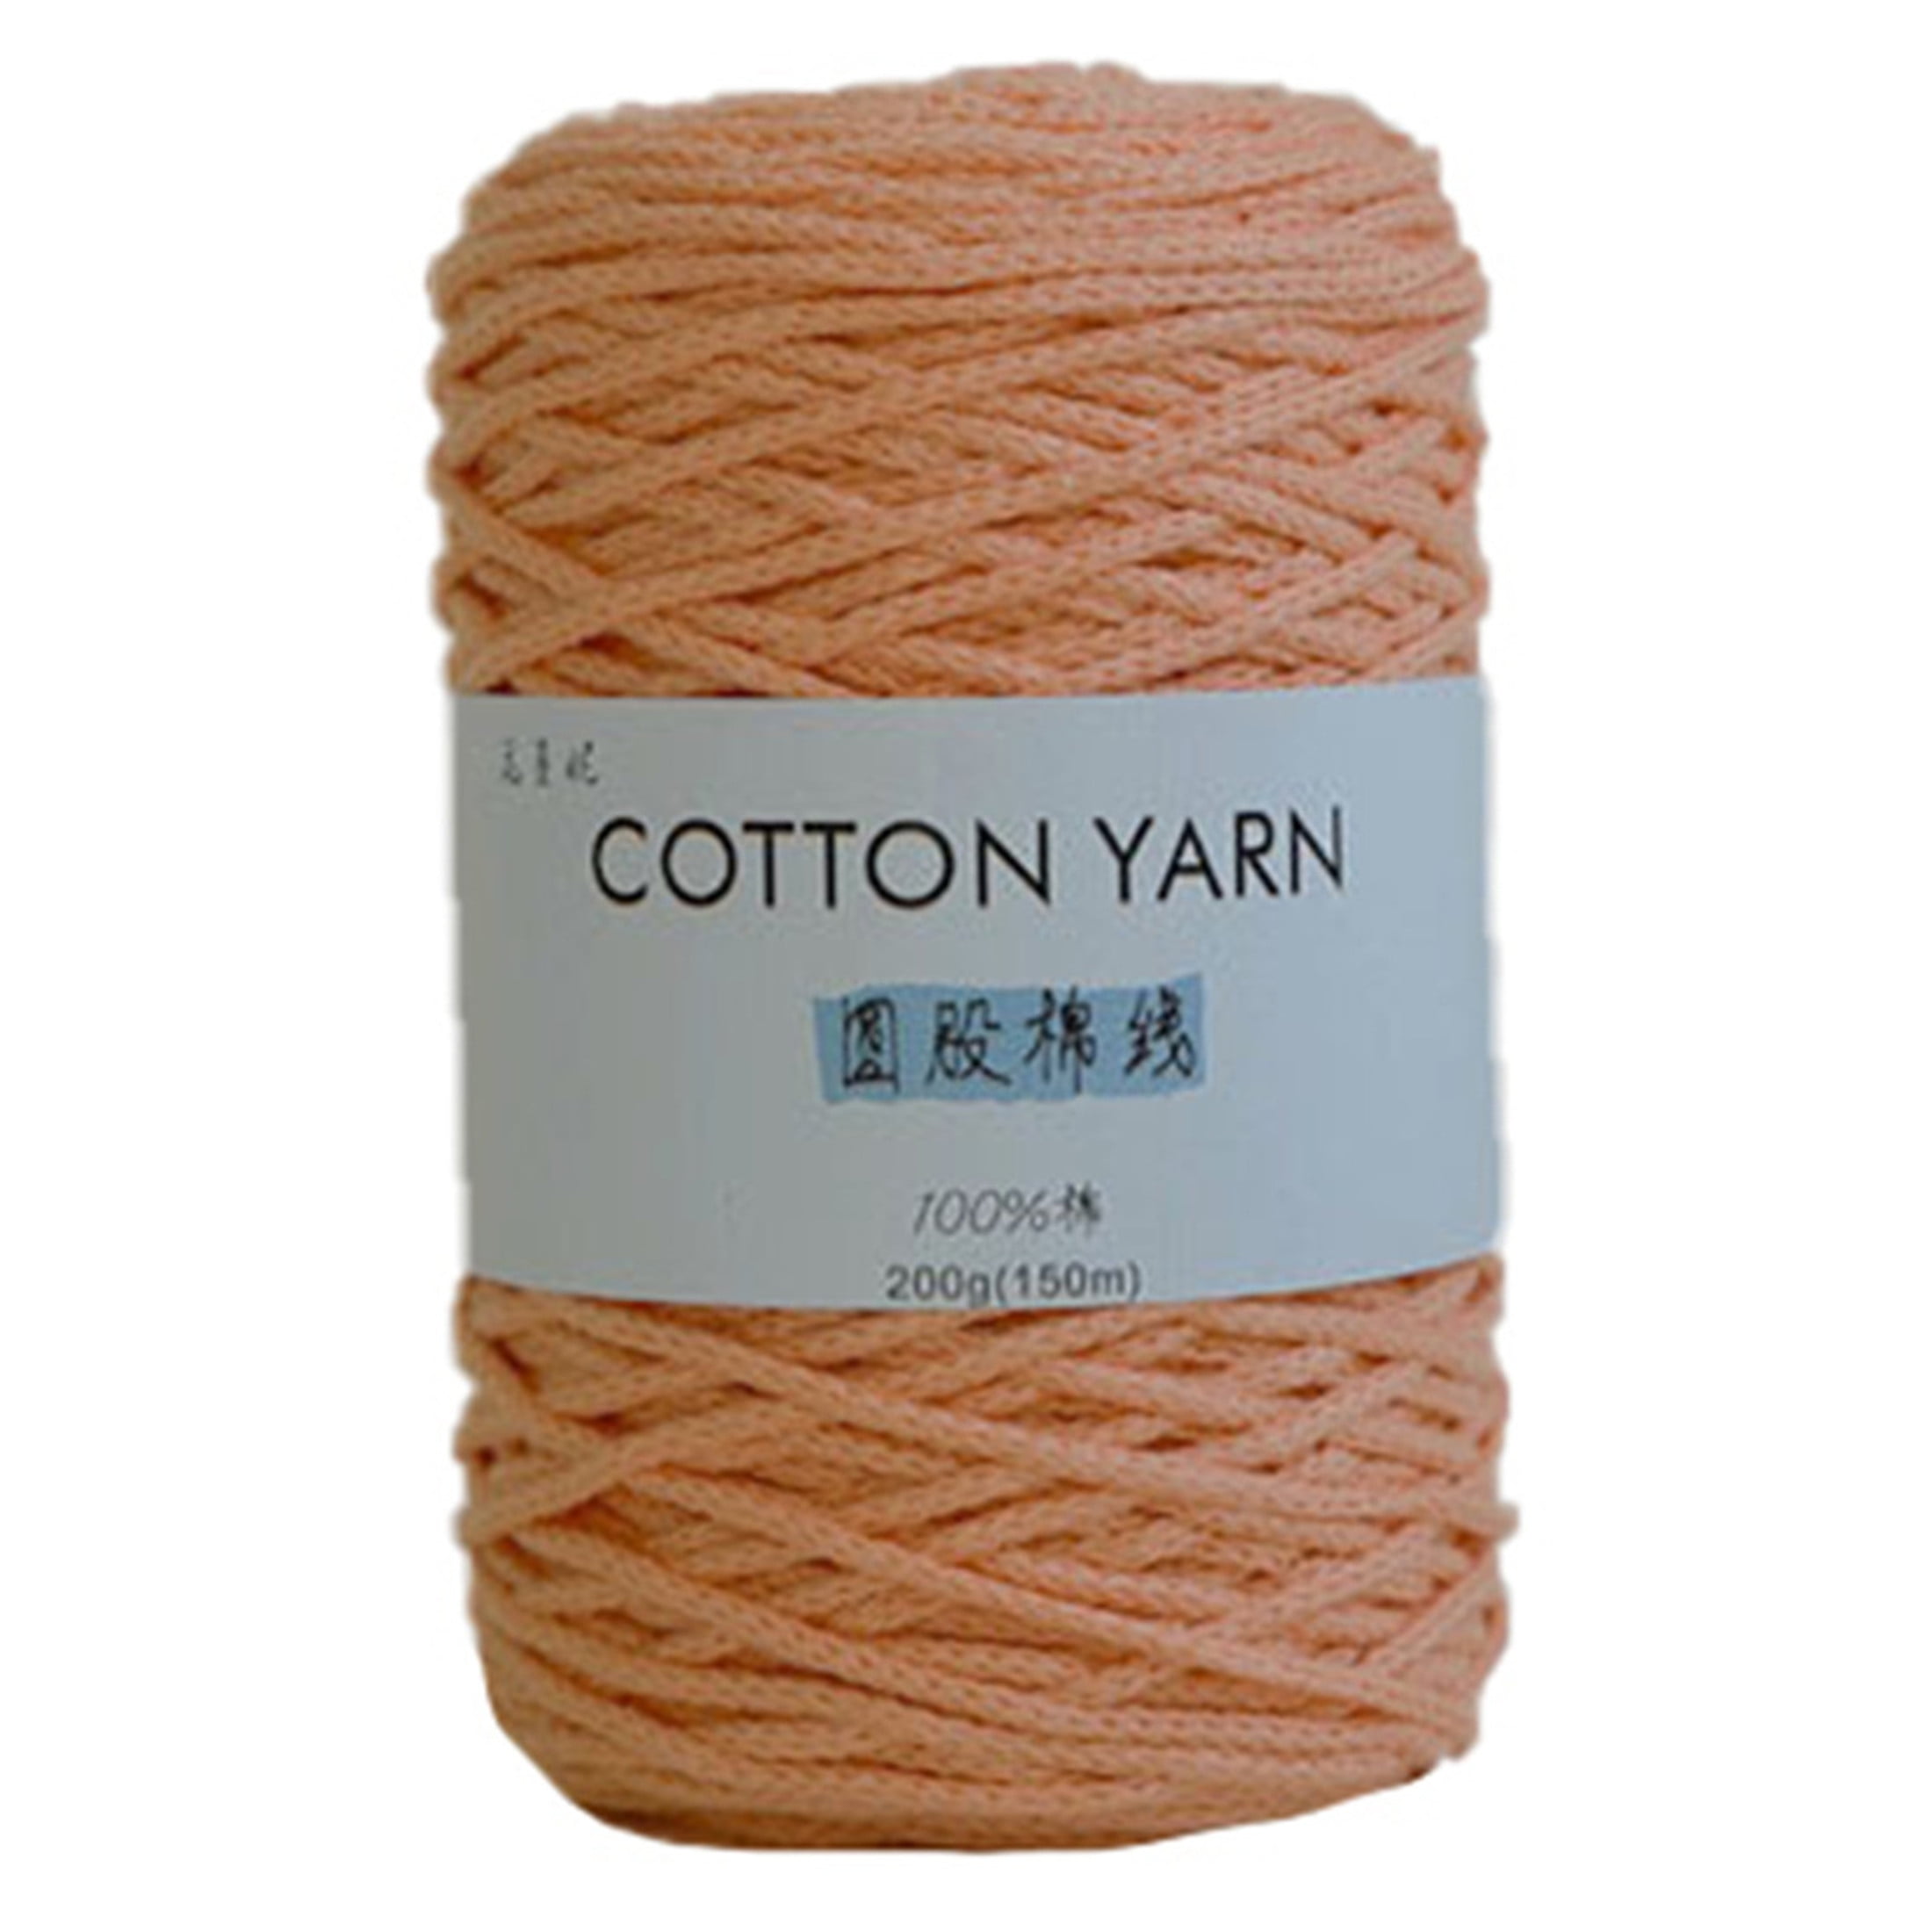 3PCS 150g Beginners Orange Yarn for Crocheting and Knitting,260 Yards  Cotton Nylon Blend Yarn for Hand DIY Bag Basket Dolls and Cushion